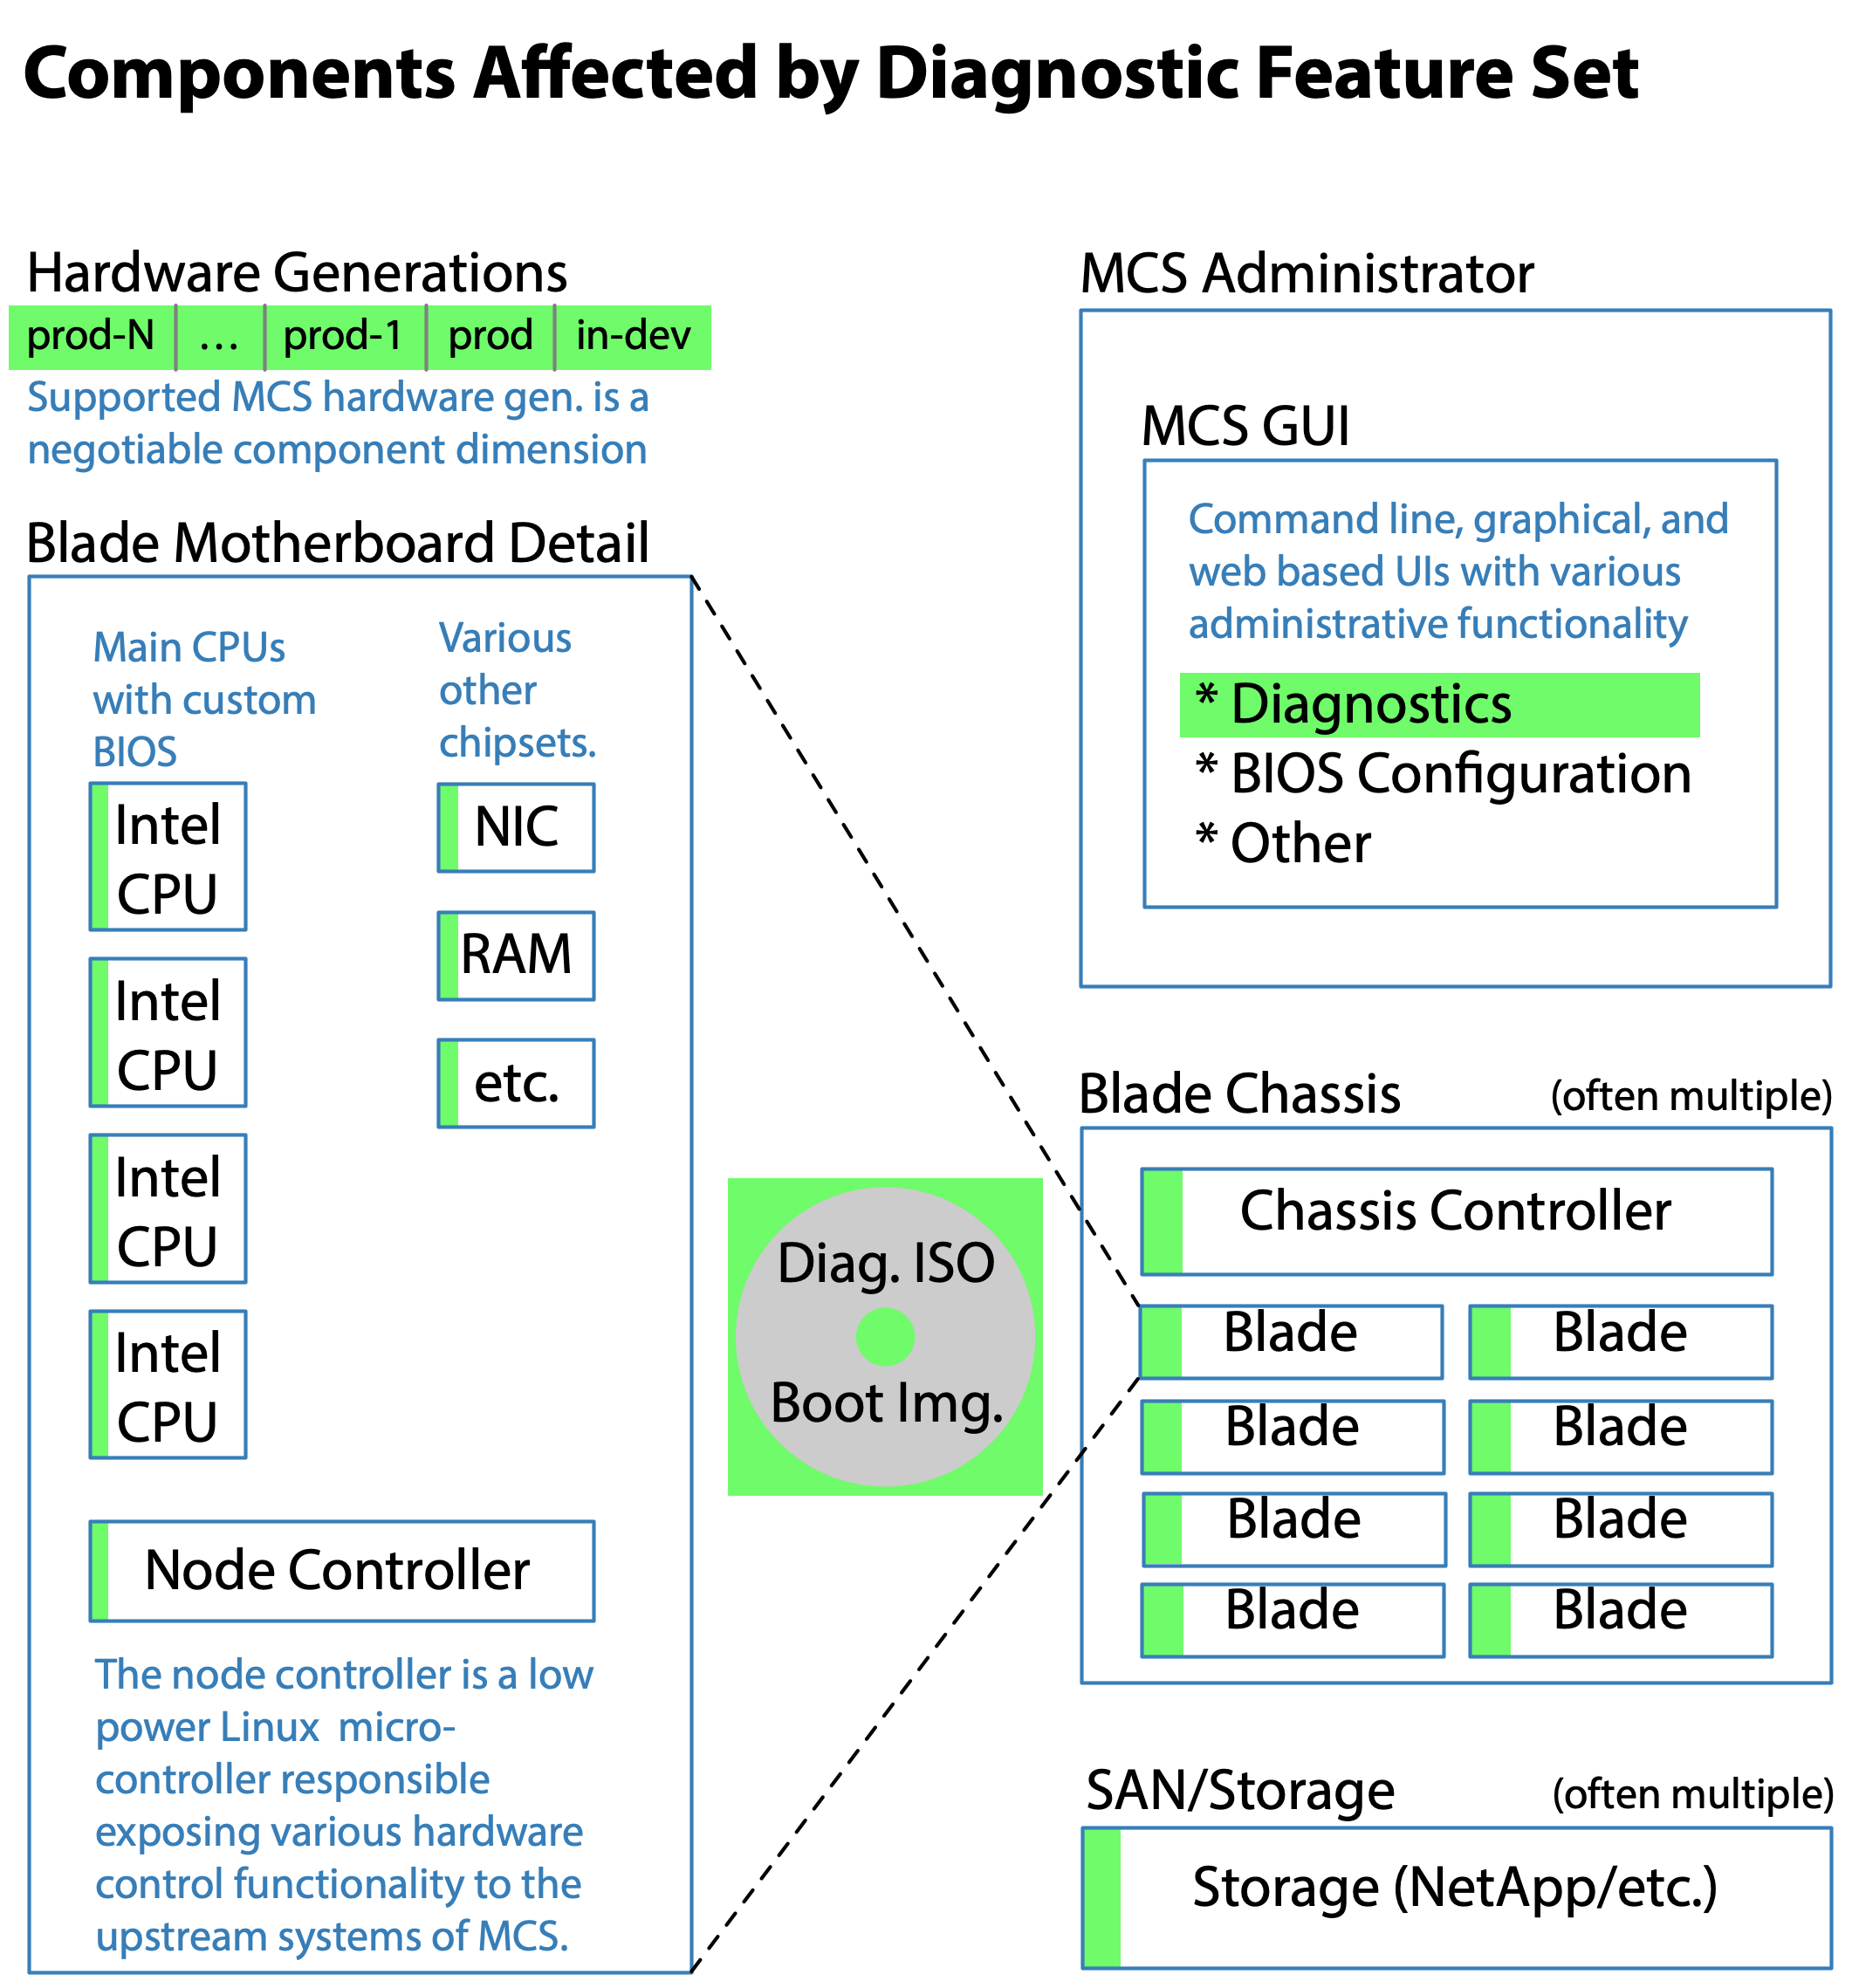 Components Affected by Diagnostic Feature Set